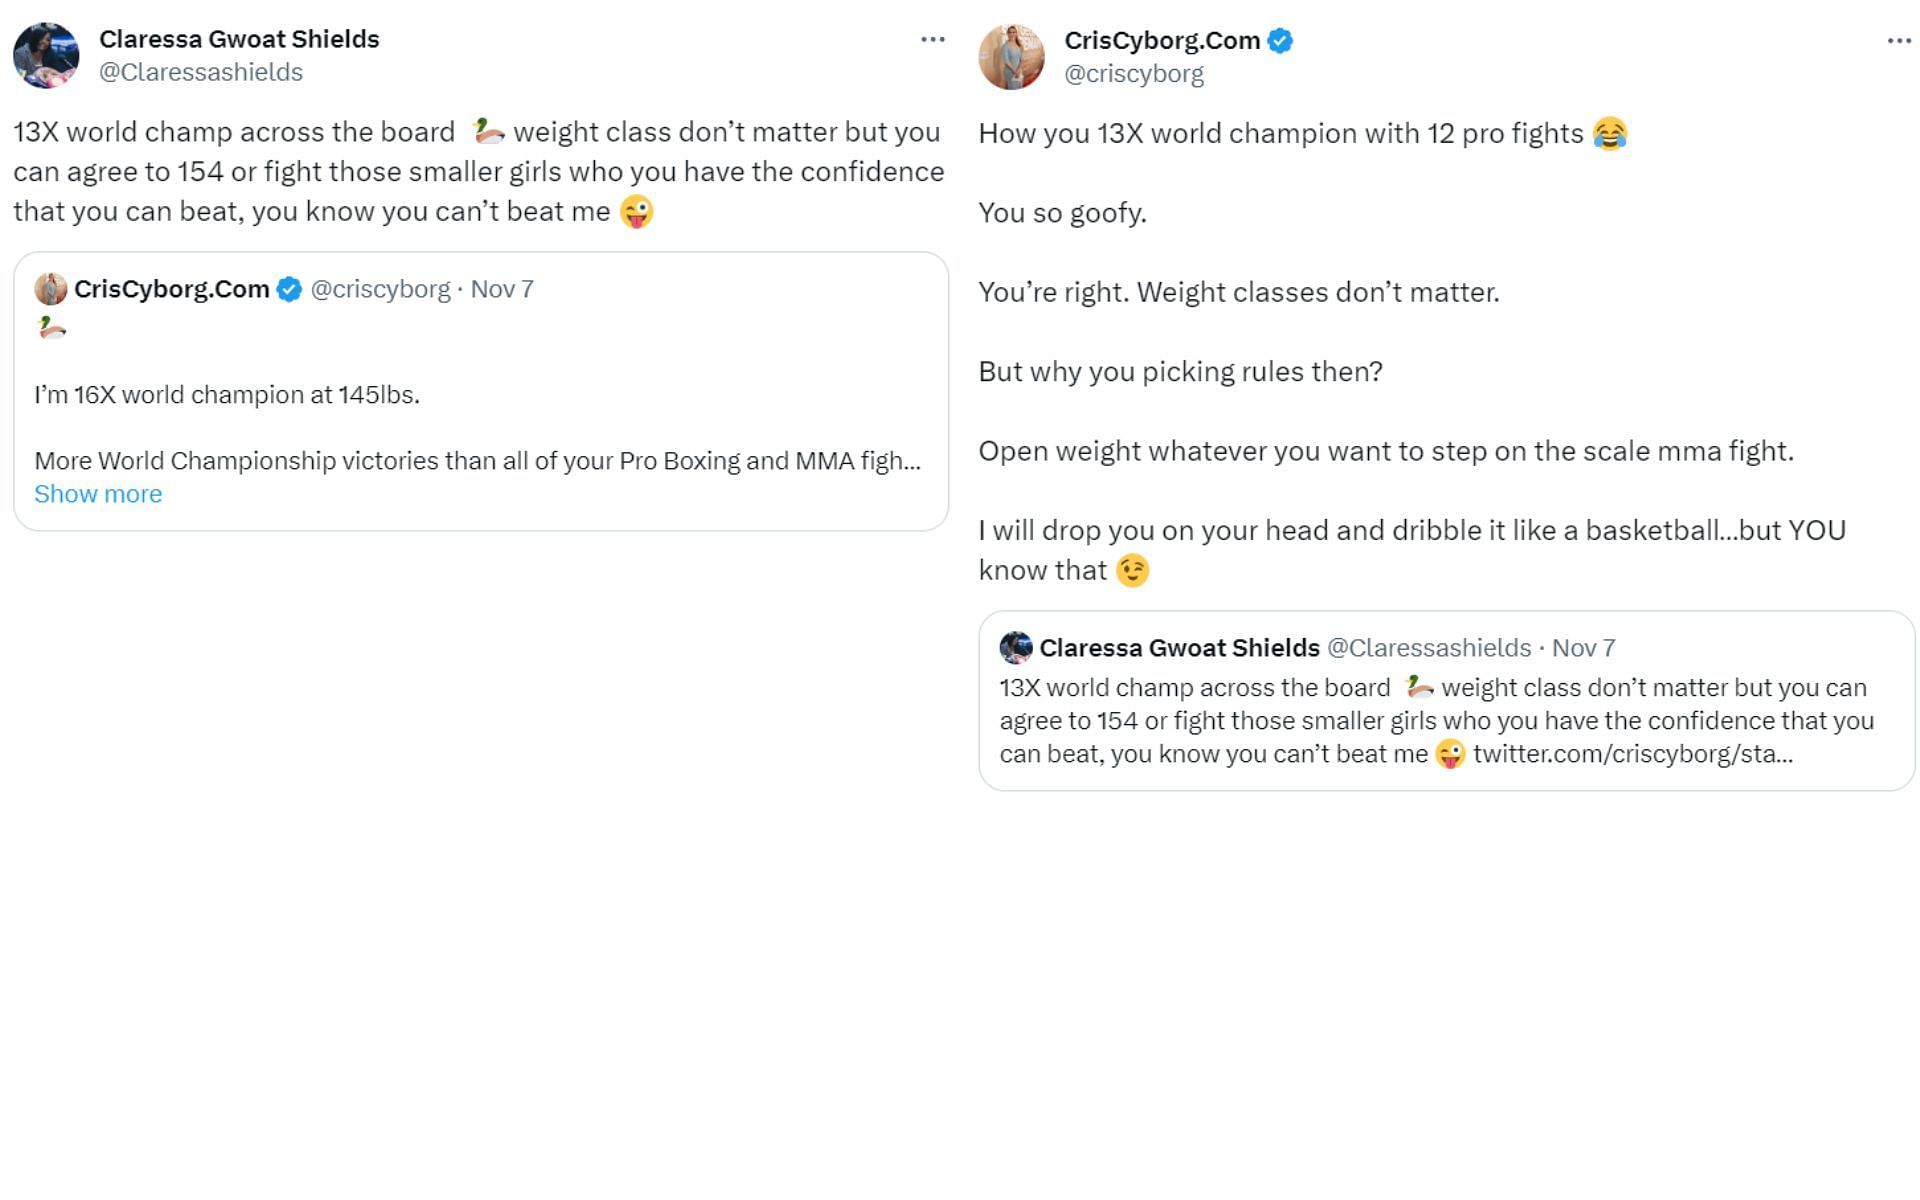 Screenshots of their tweets